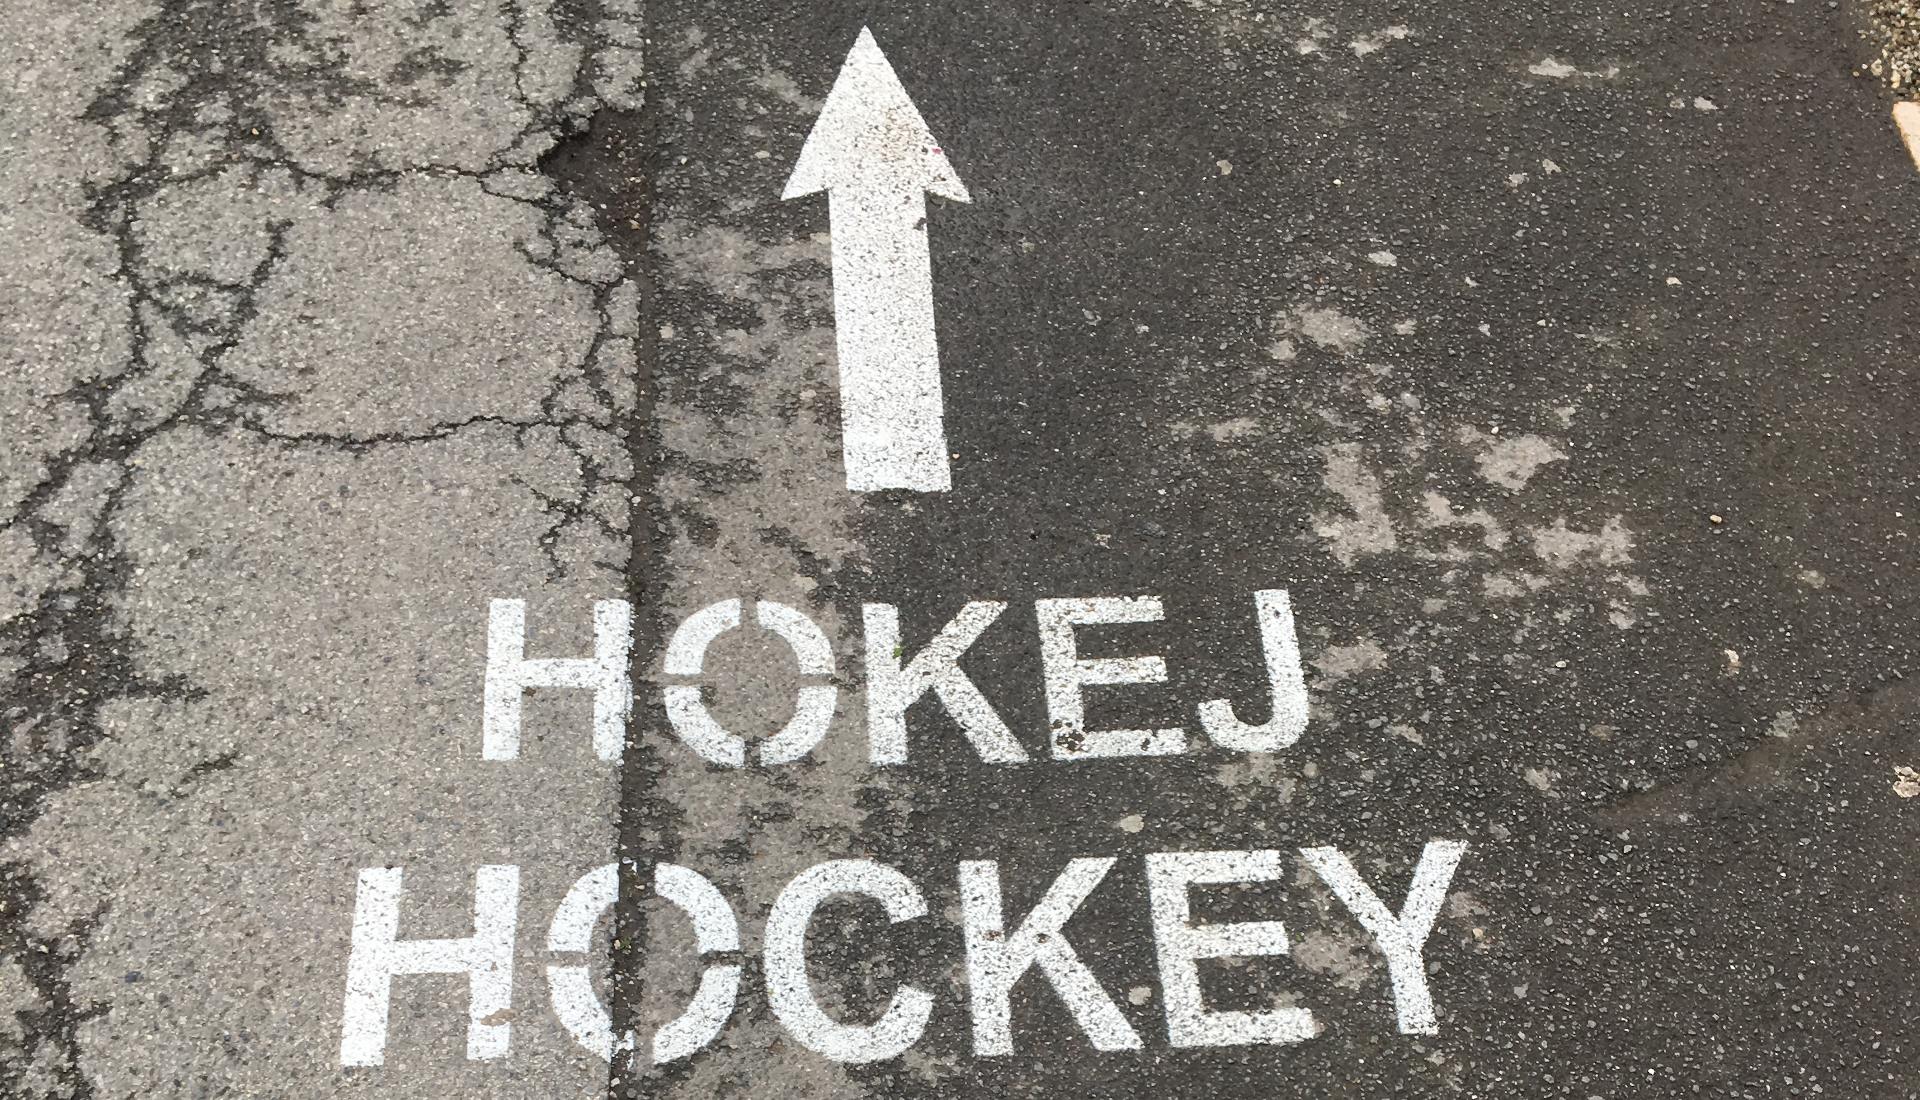 Directional arrow on ground pointing to hokej / hockey (Credit: Nicholas Moon)